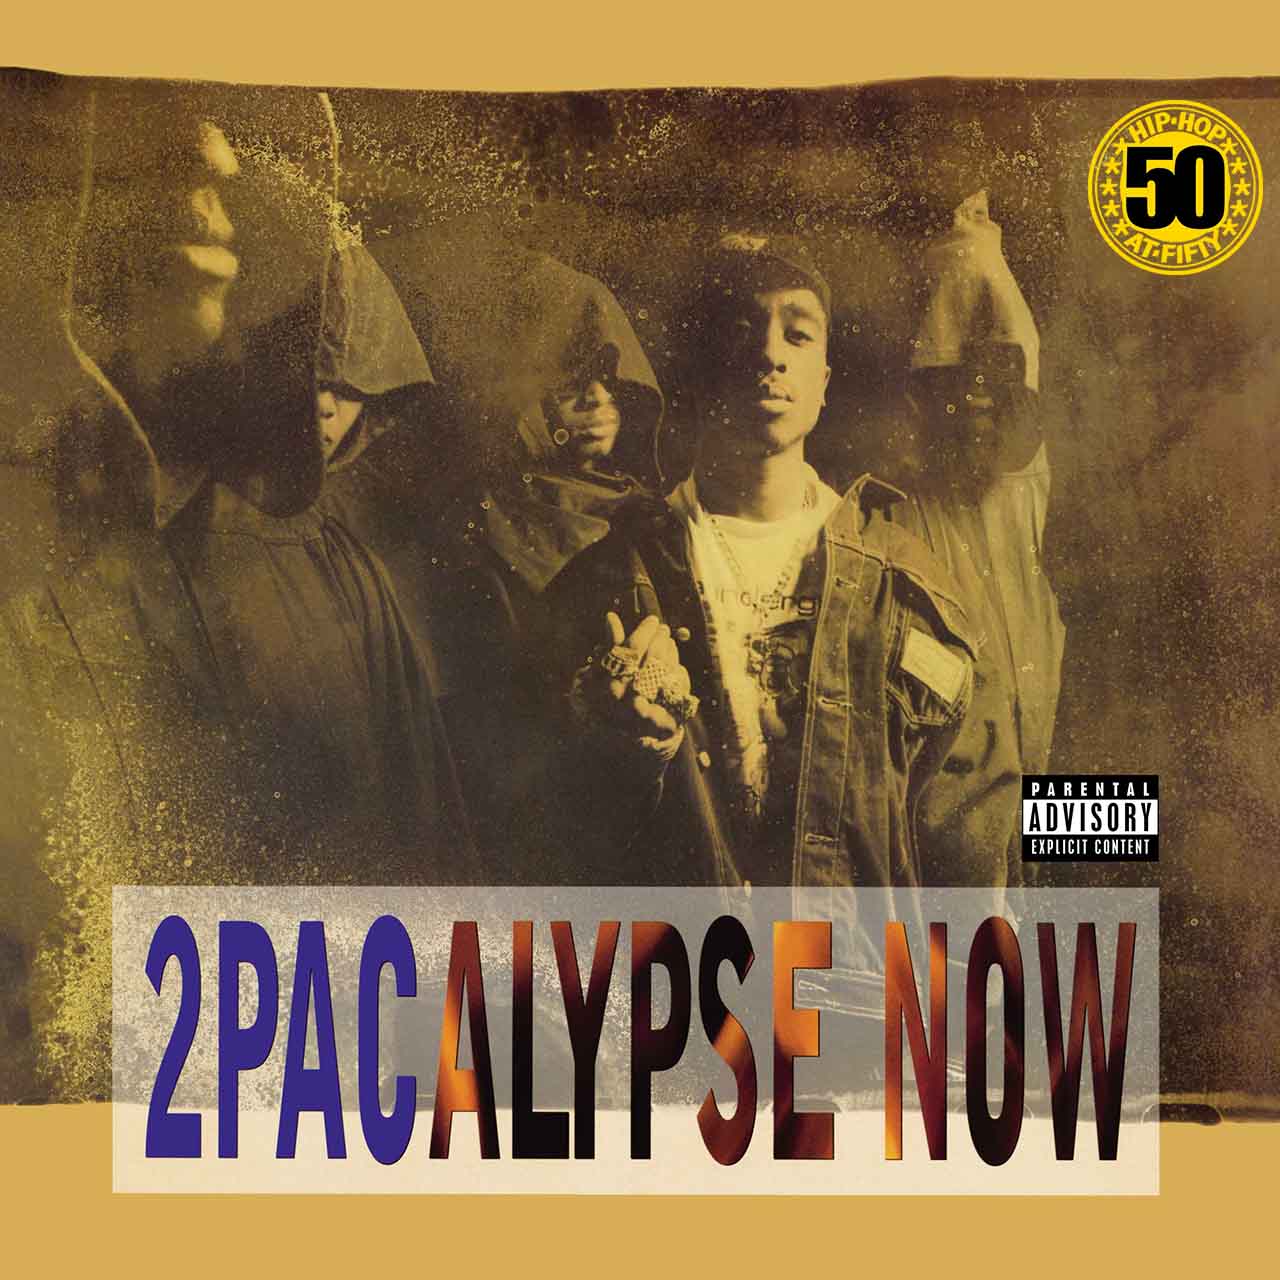 ‘2Pacalypse Now’: 2Pac’s Incendiary Debut Album